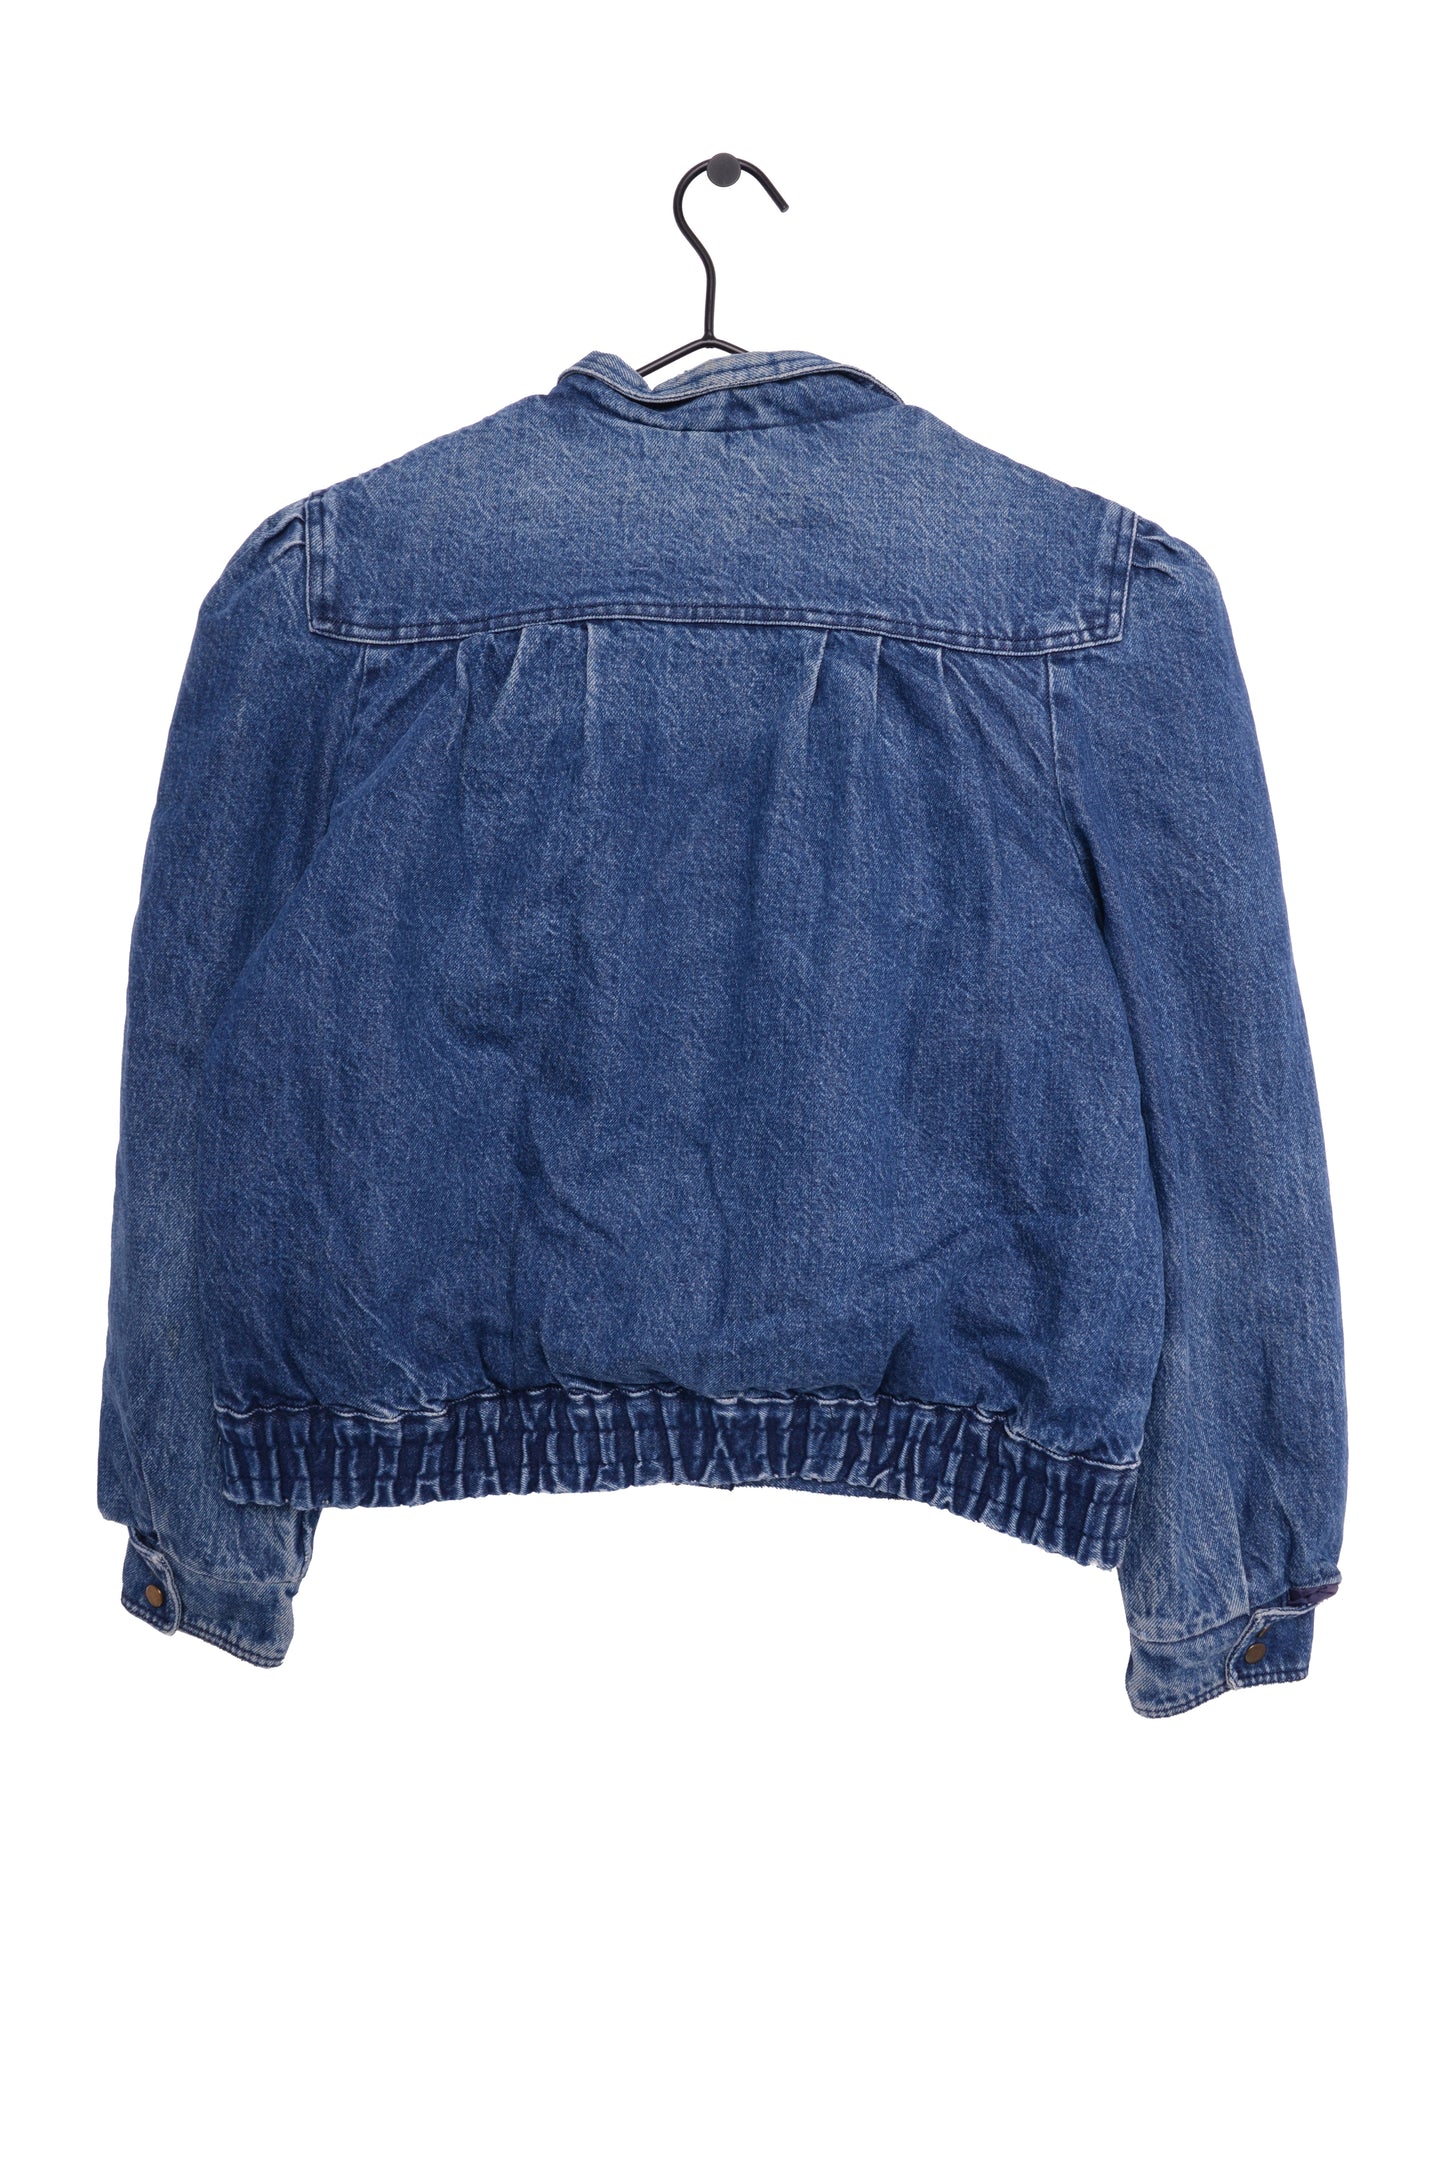 1980s Flannel Lined Denim Jacket